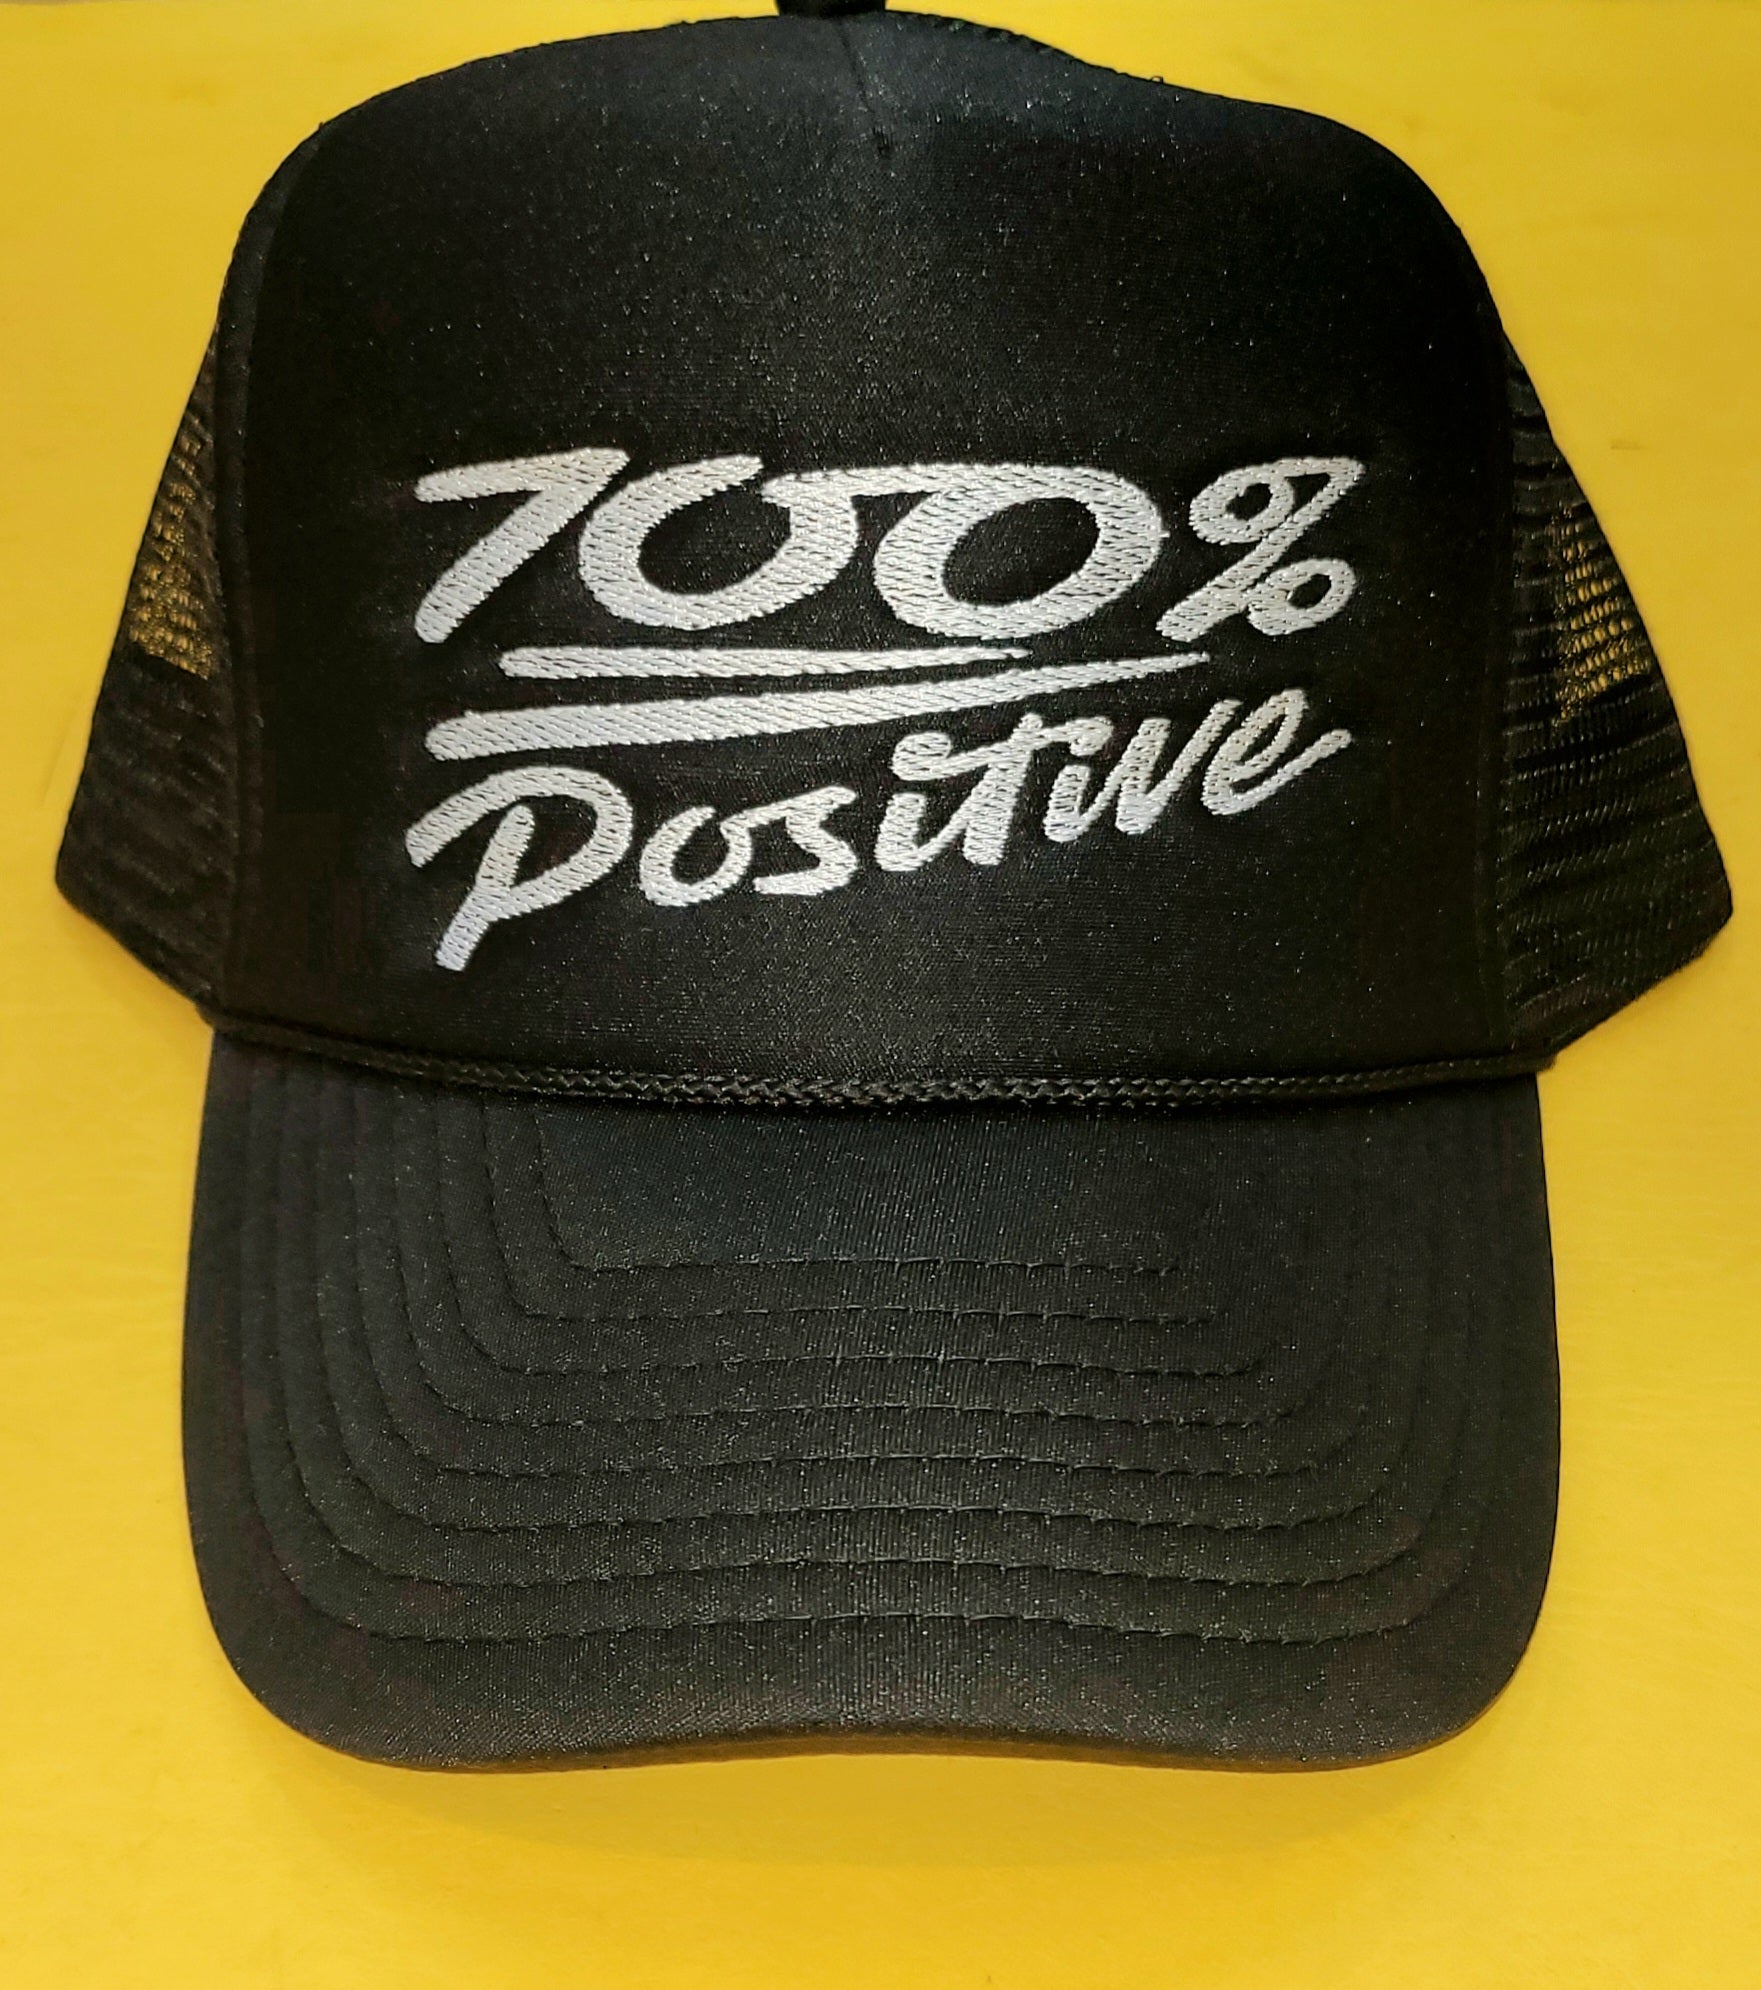 100% POSITIVE TRUCKER HATS- White Label